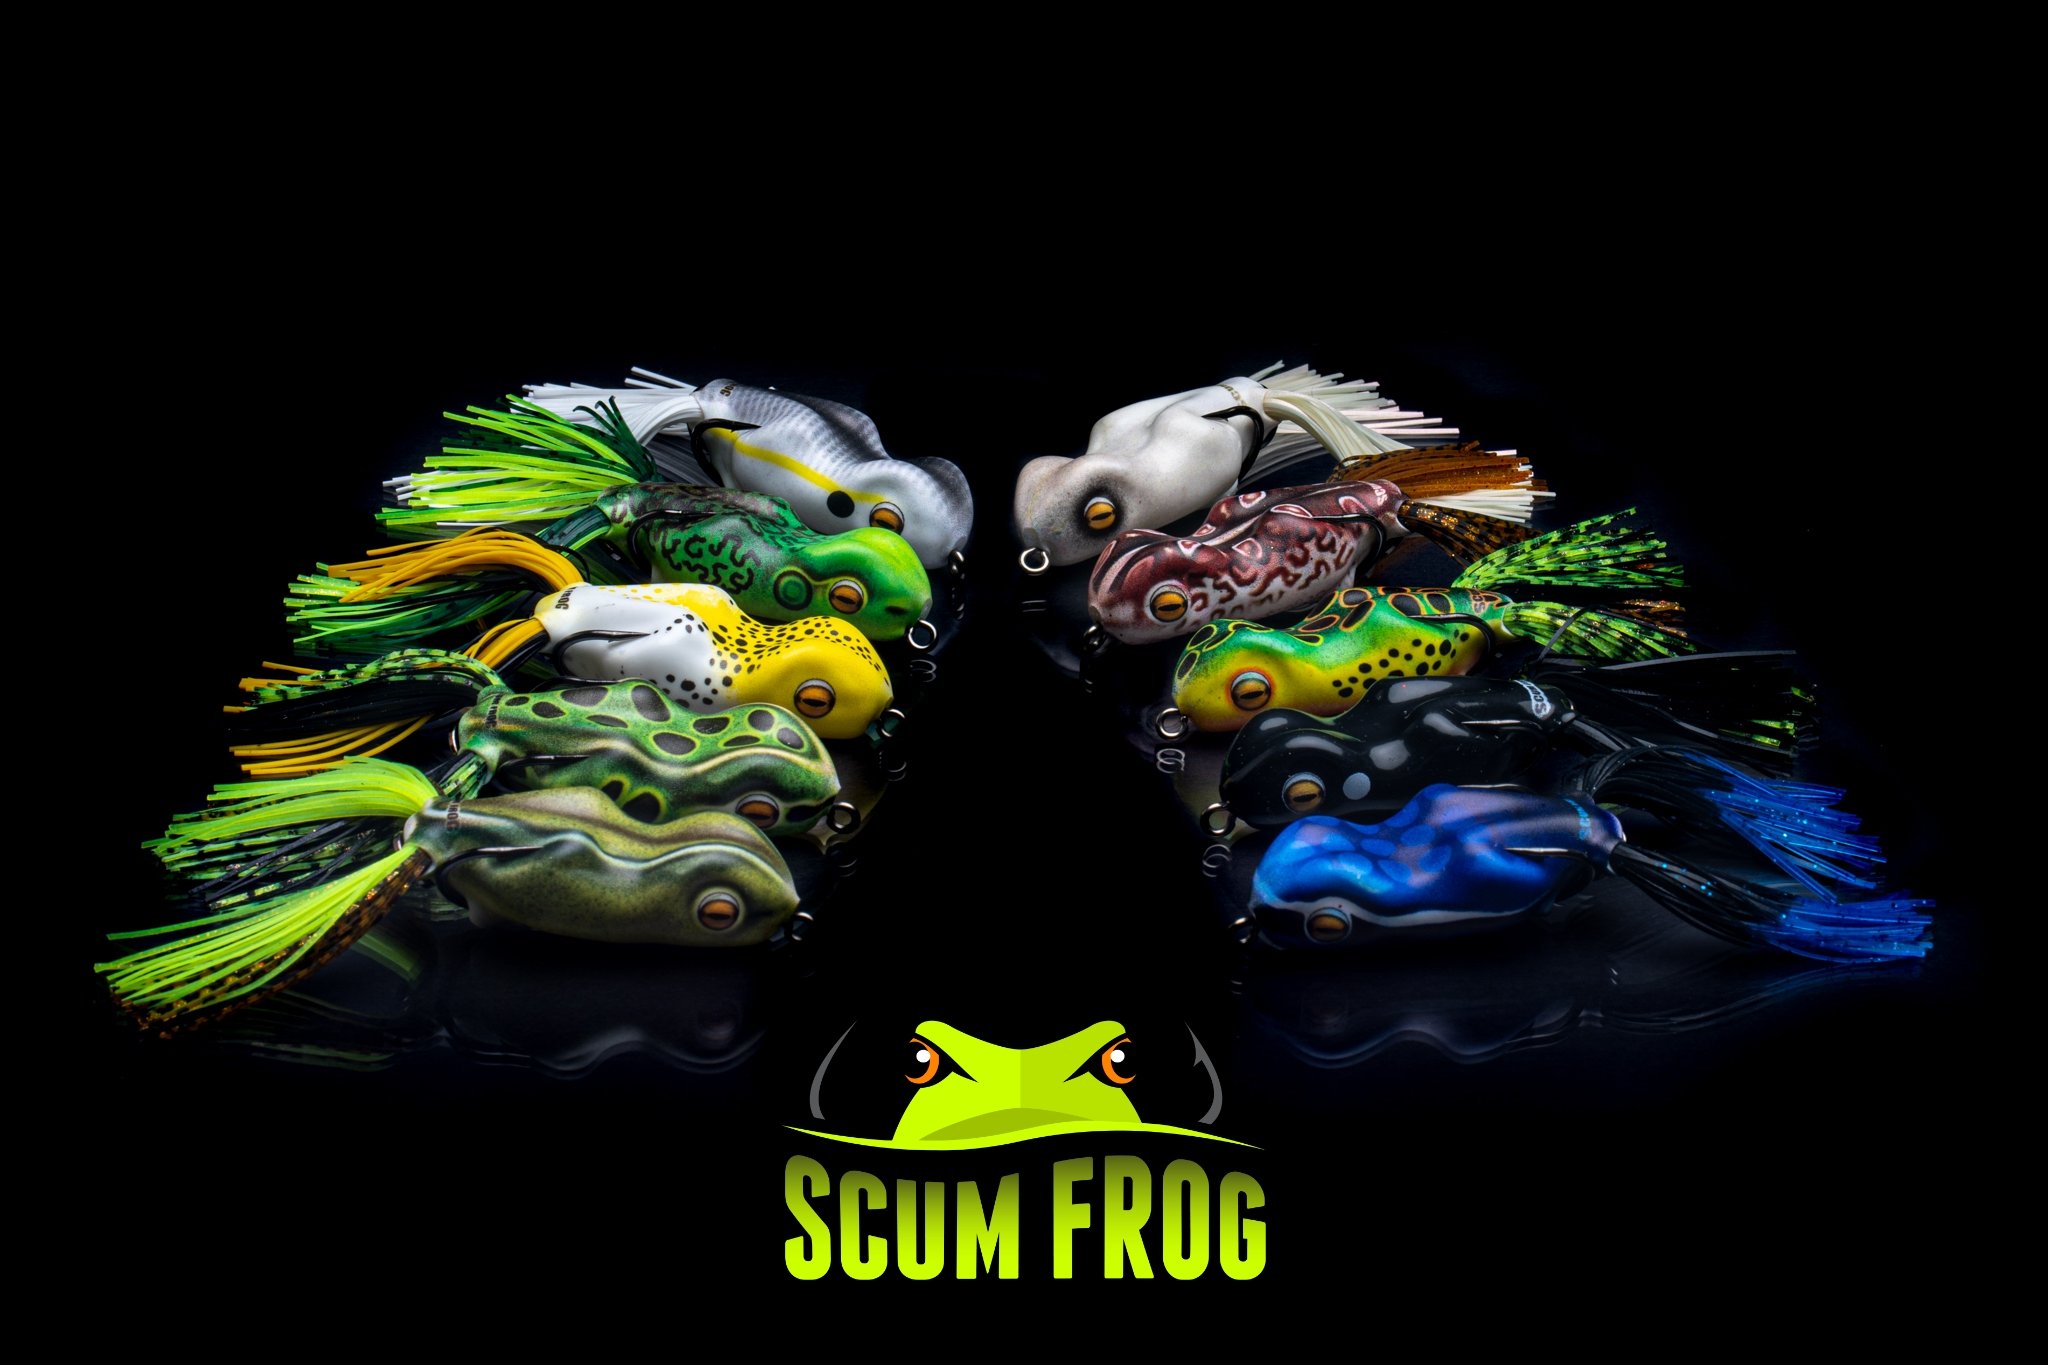 https://anglerschannel.com/wp-content/uploads/2020/06/Scum-Frog-Trophy-Series-Painted.jpg